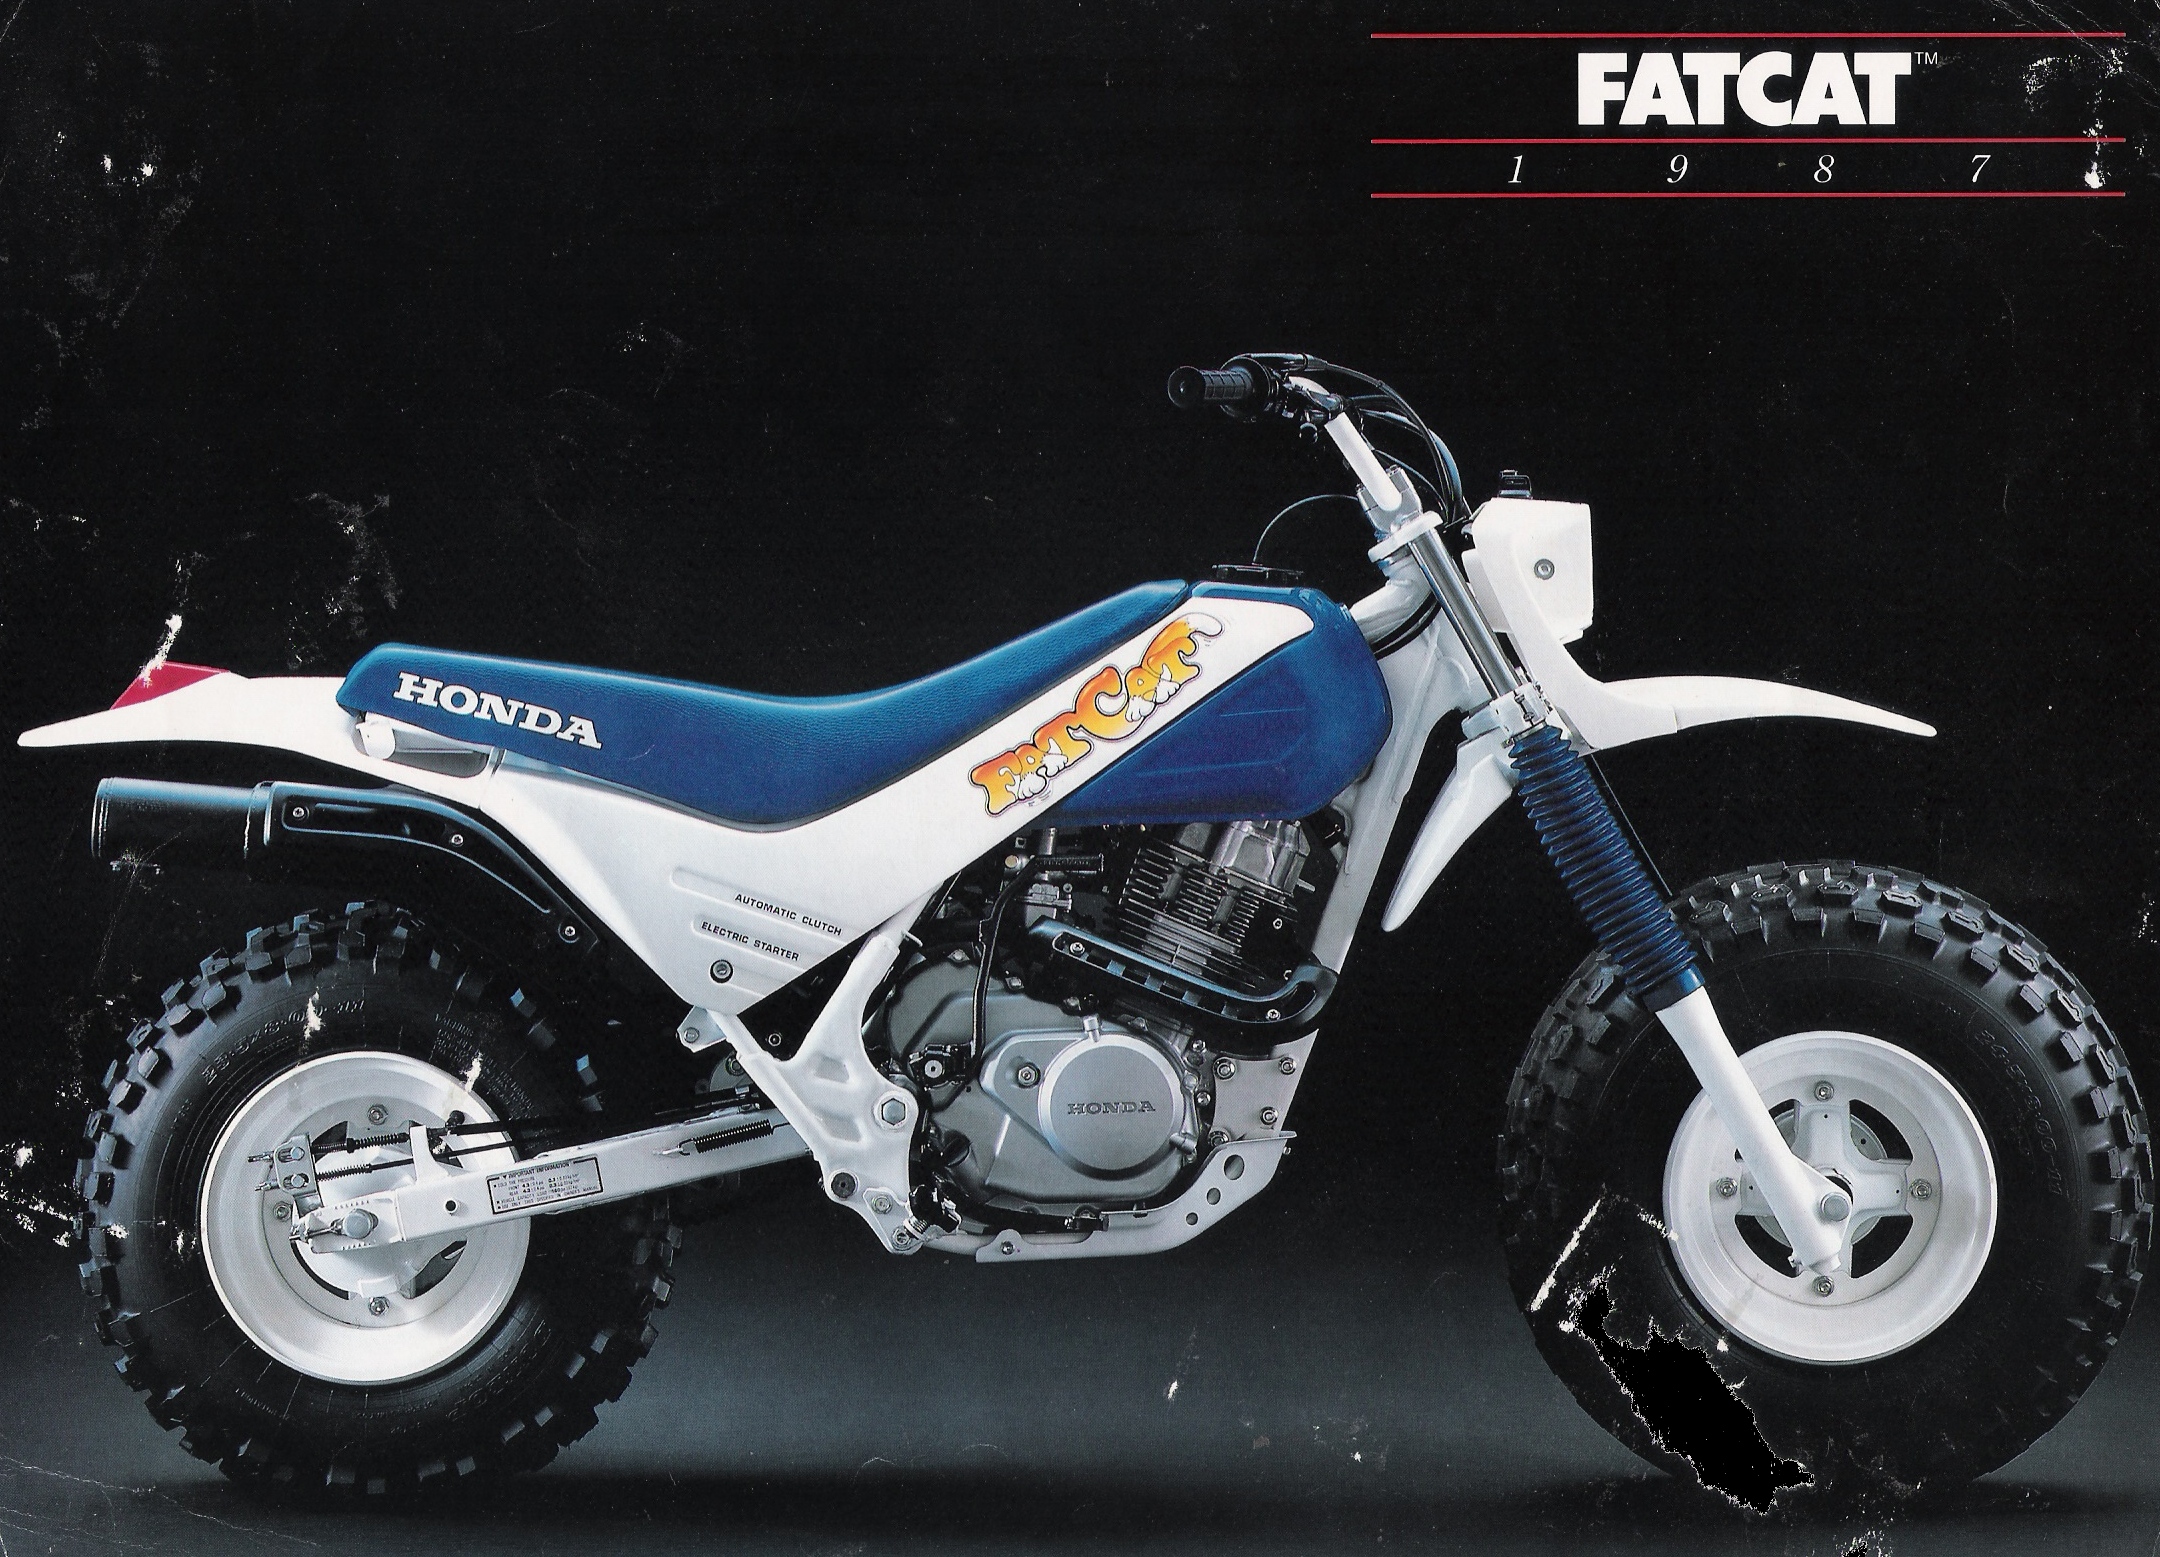 HONDA FATCAT 200 1987 запчасти